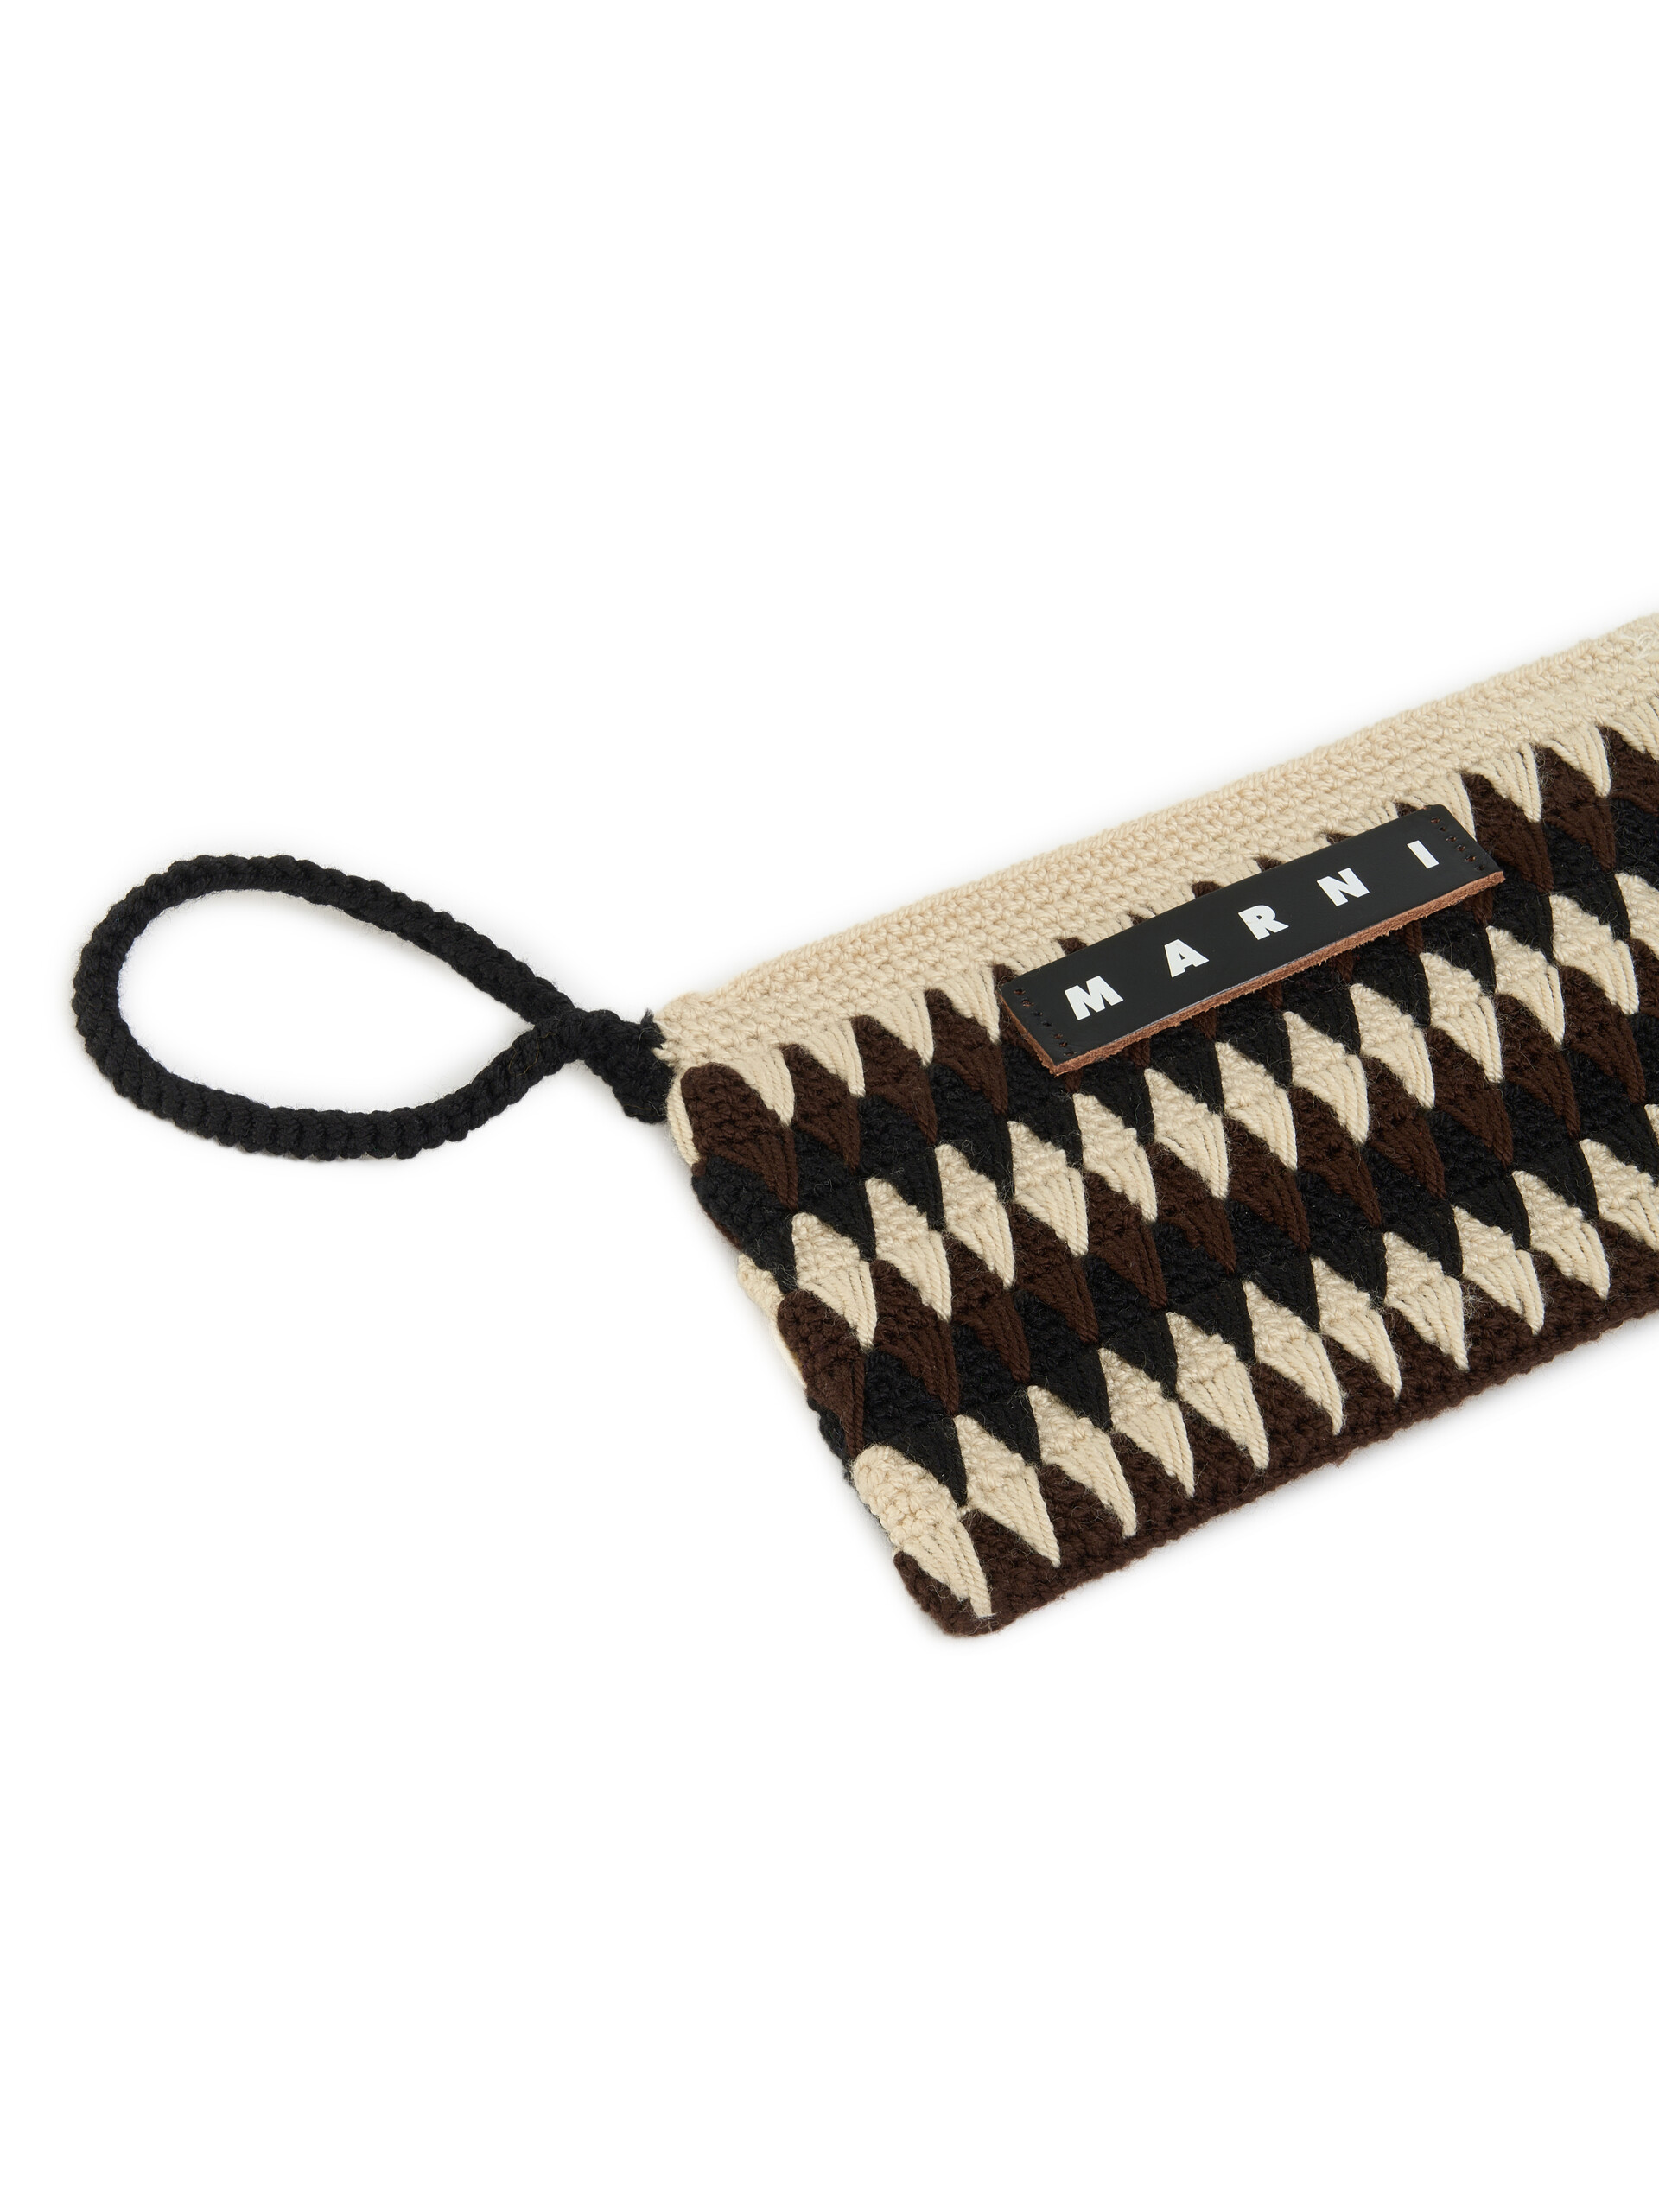 Black Crochet Marni Market Medium Chessboard Pouch - Accessories - Image 3